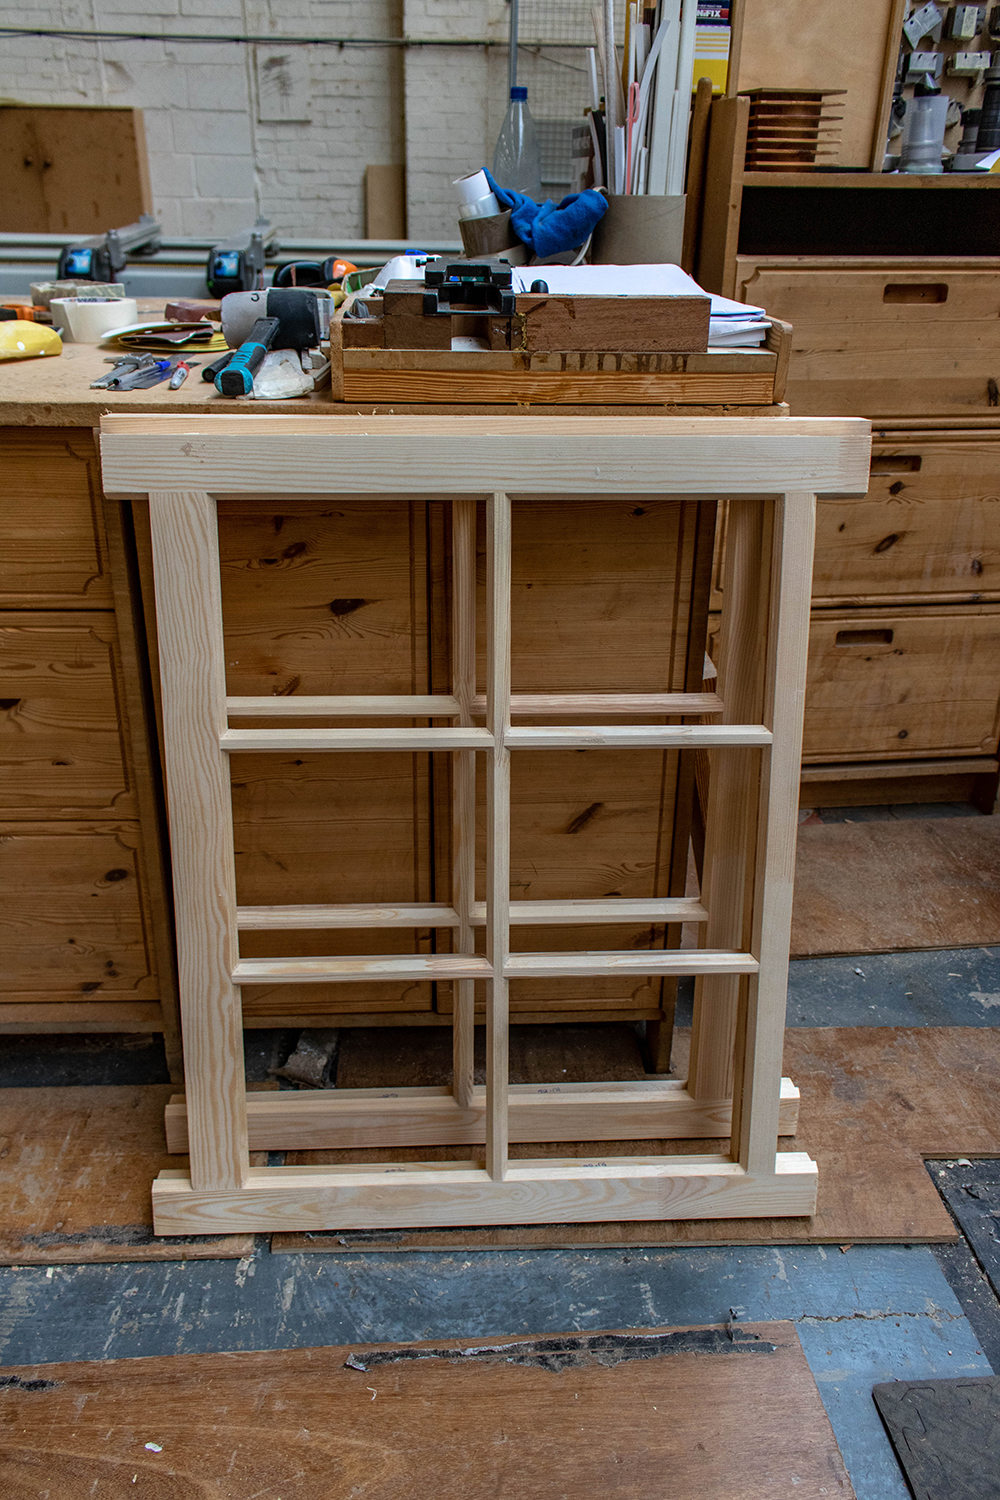 Set of 2 window frames in joinery workshop